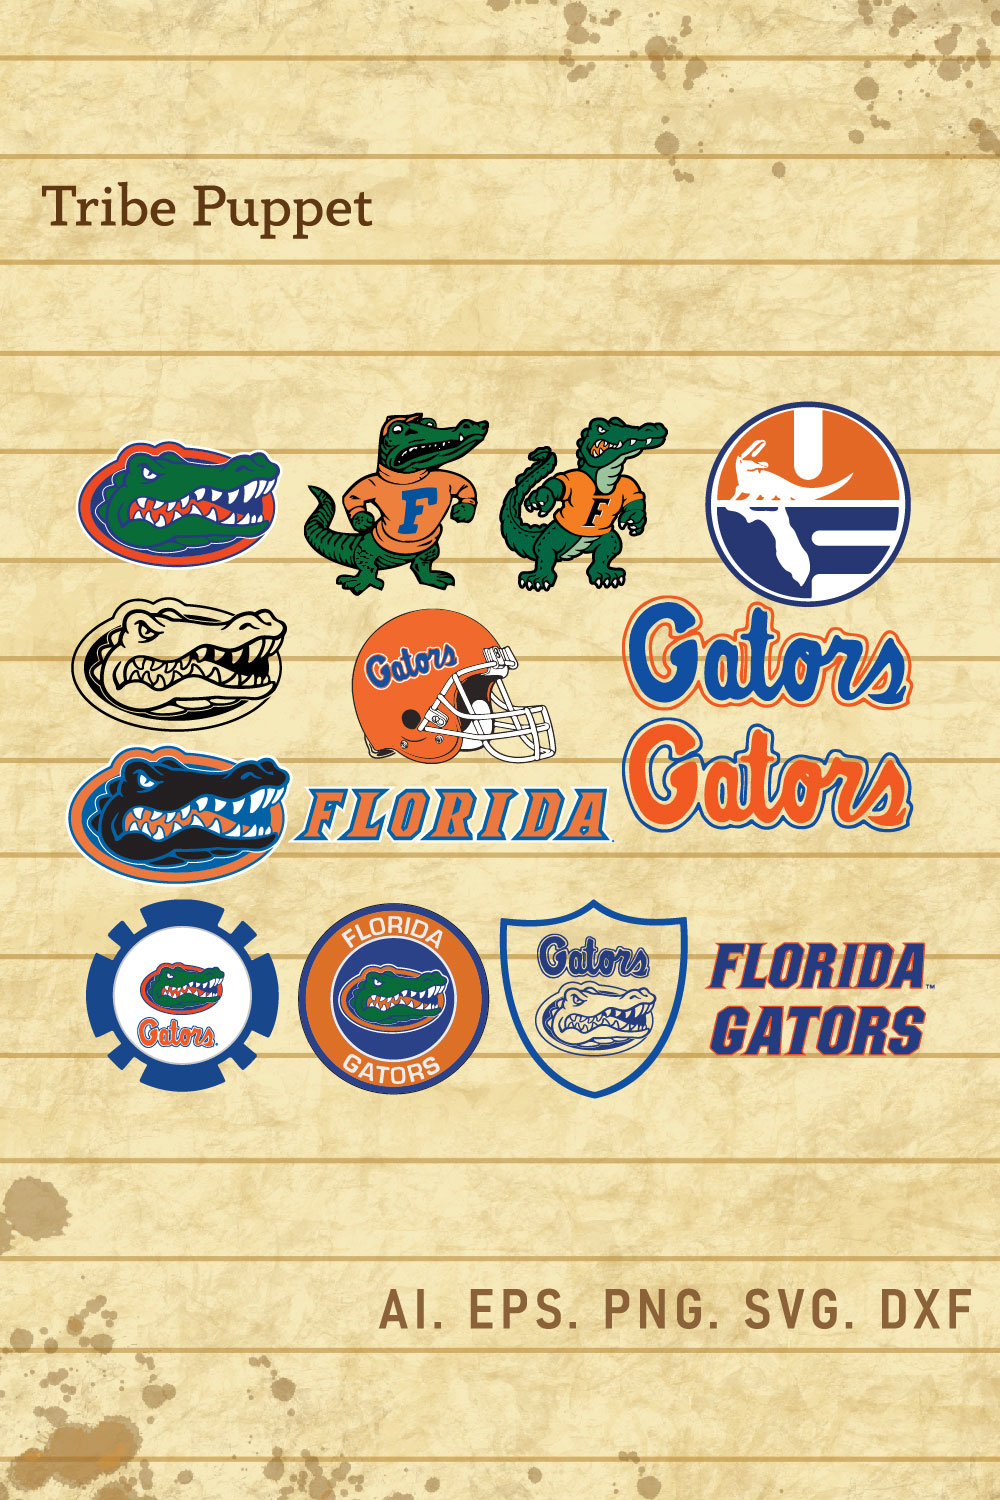 Florida Gators SVG Set pinterest preview image.